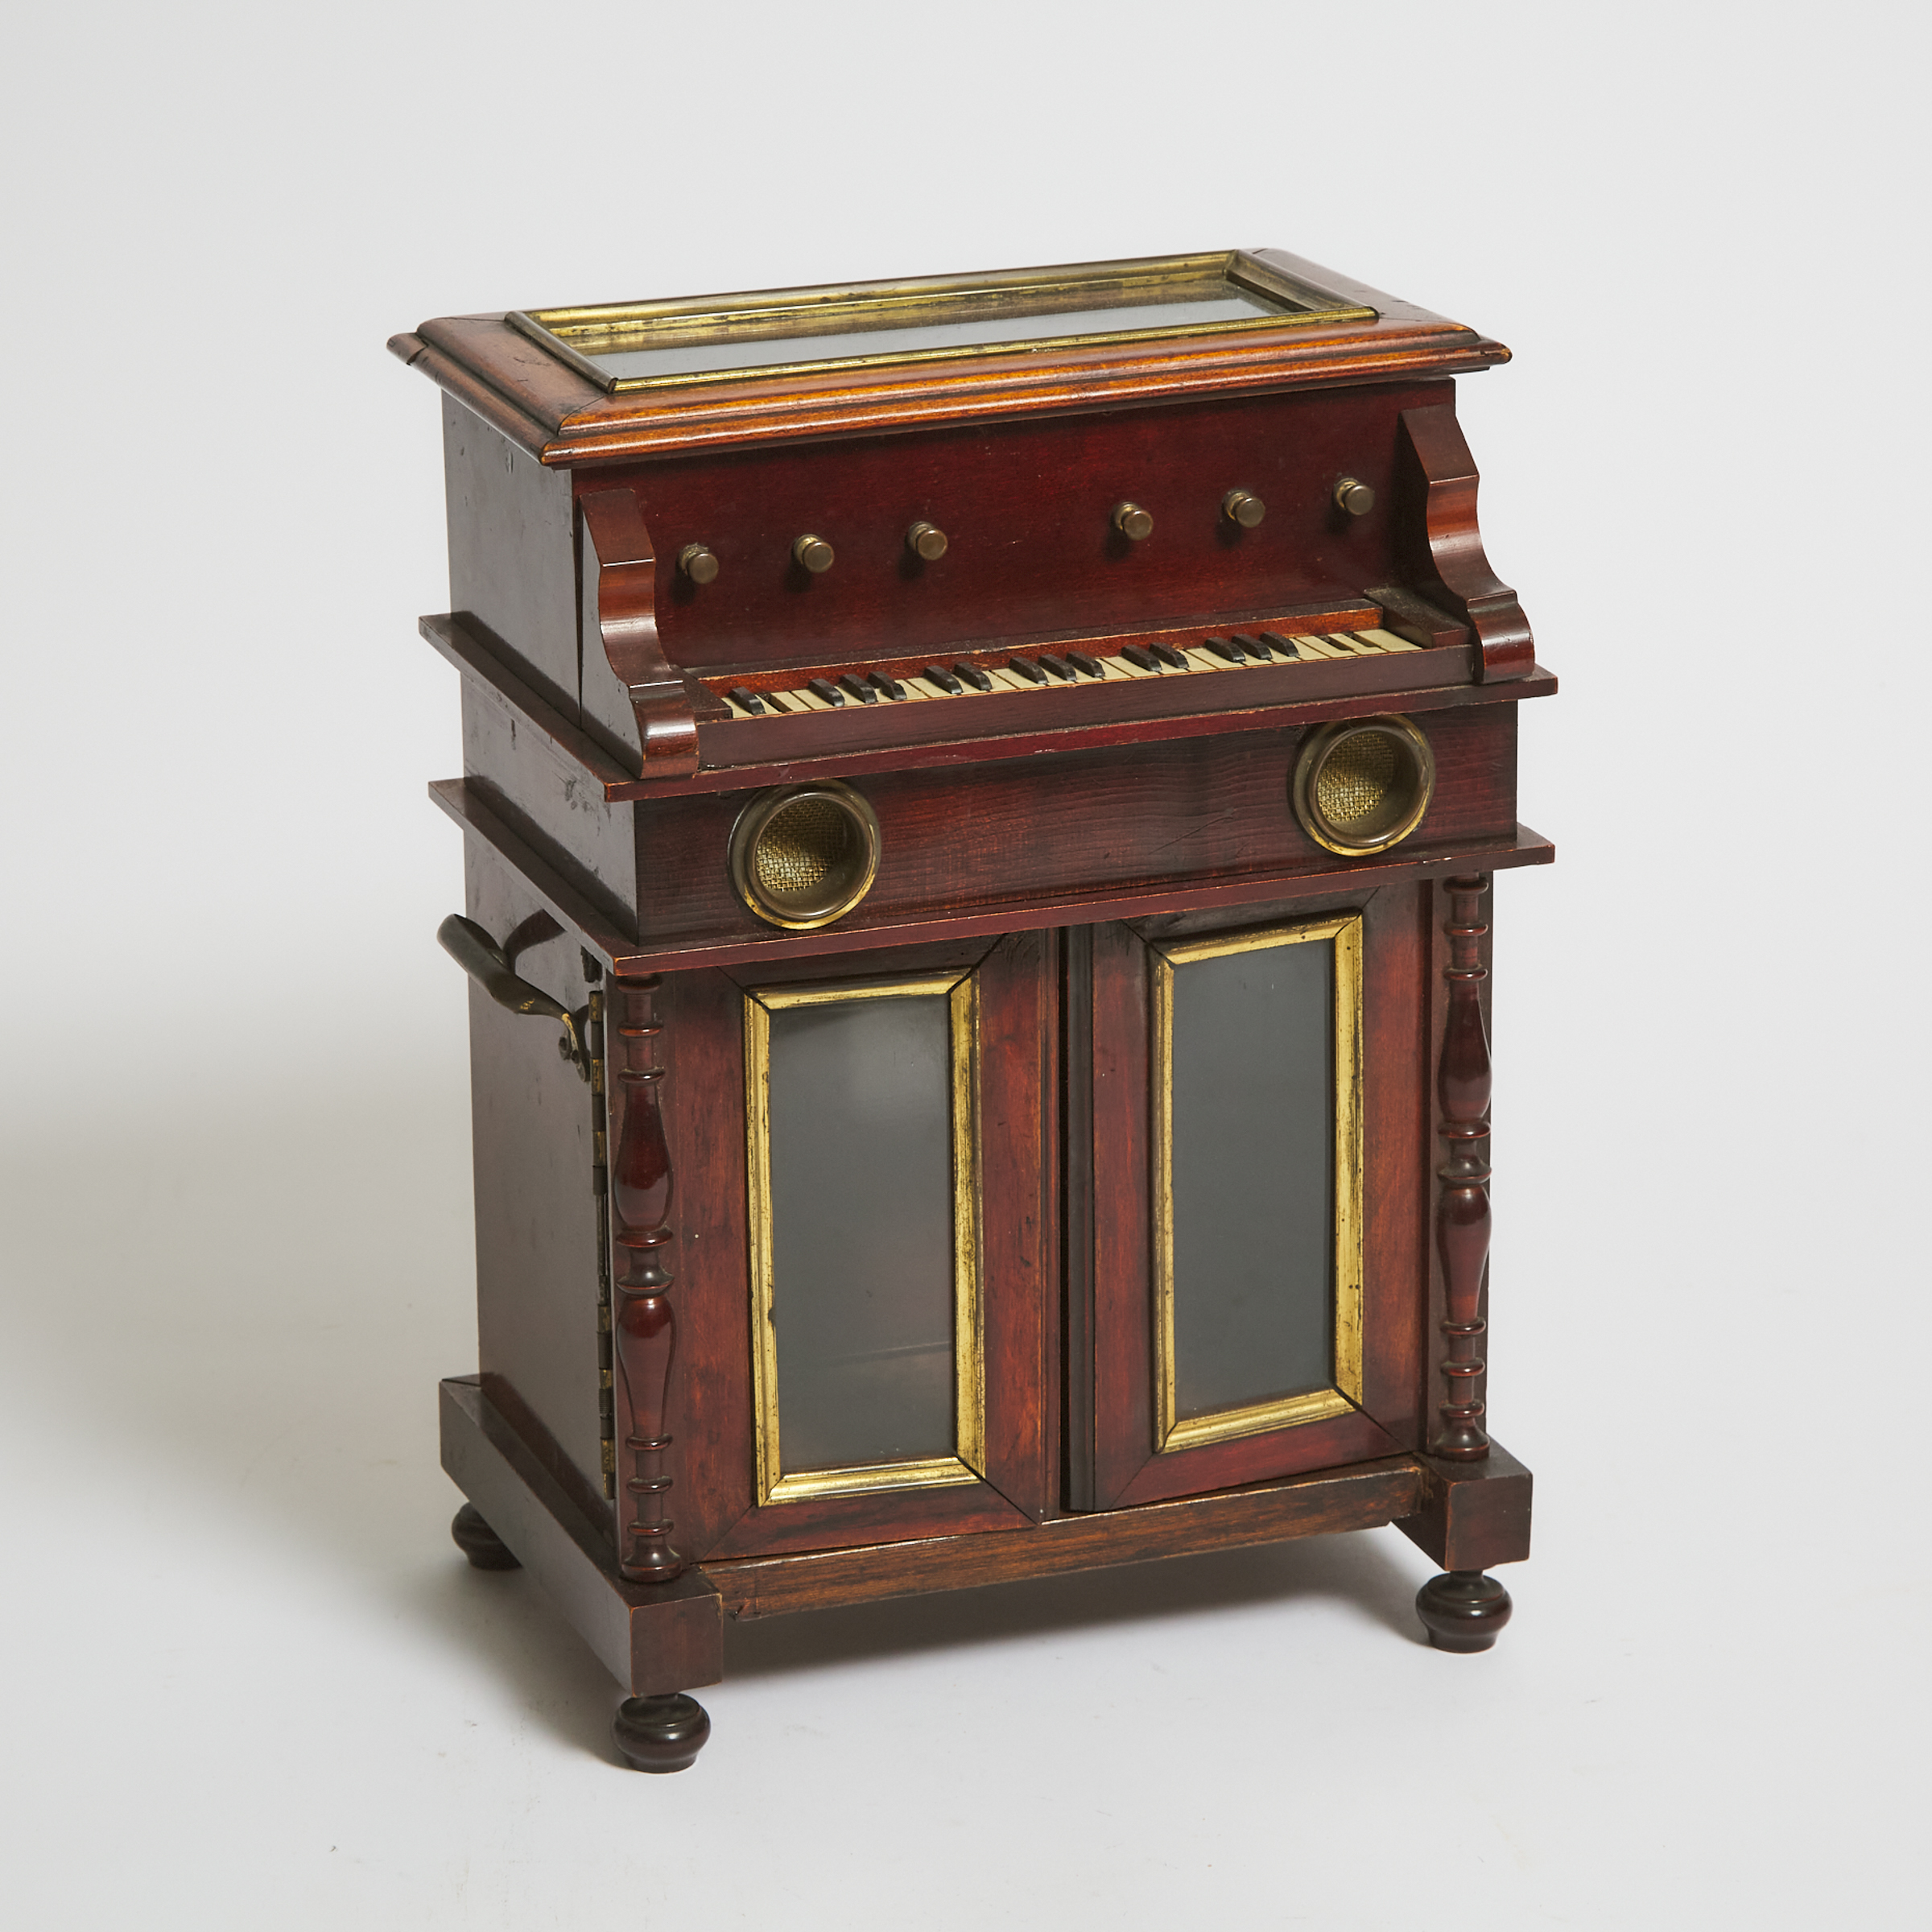 Austrian Mahogany Musical Automaton Miniature Organ Form Tantalus, early 20th century